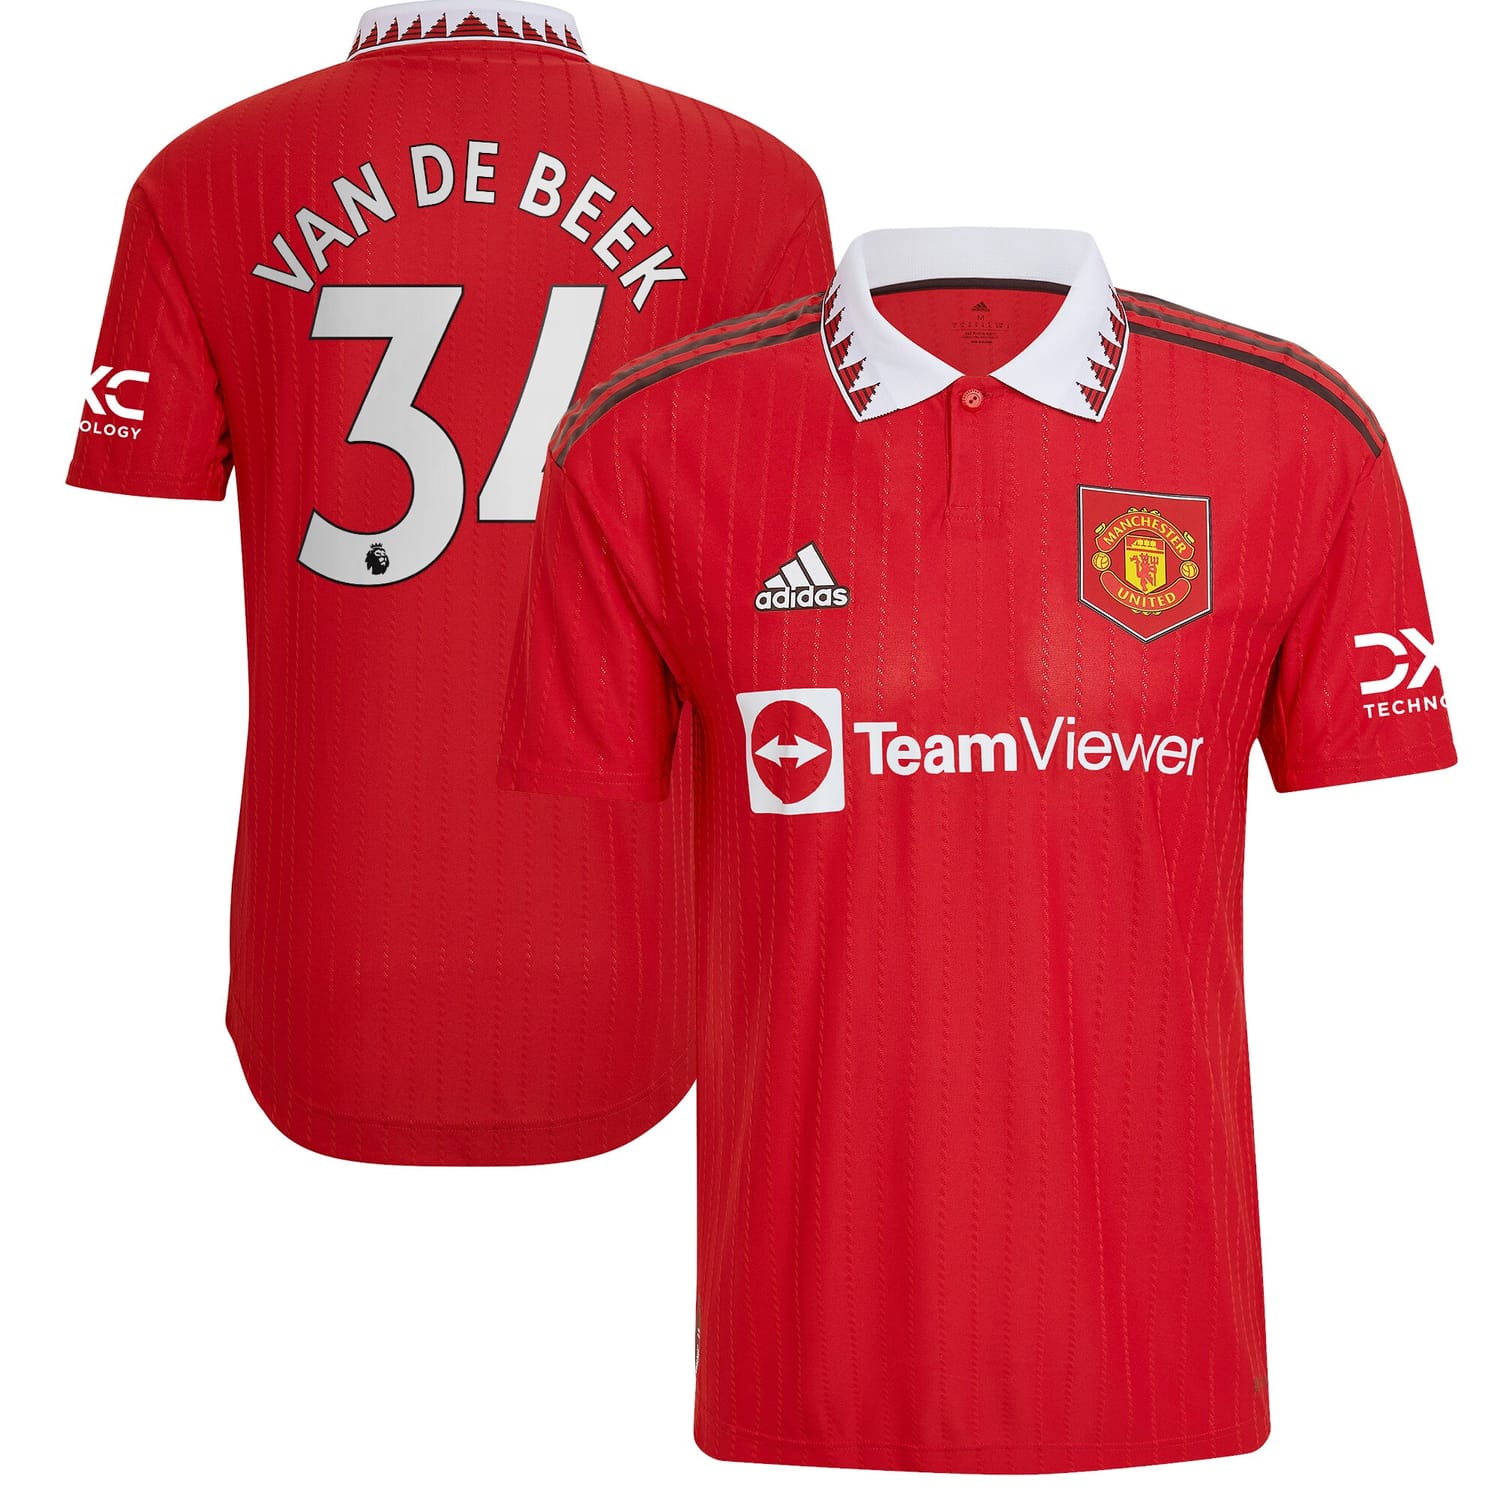 Premier League Manchester United Home Authentic Jersey Shirt 2022-23 player Donny Van De Beek 34 printing for Men